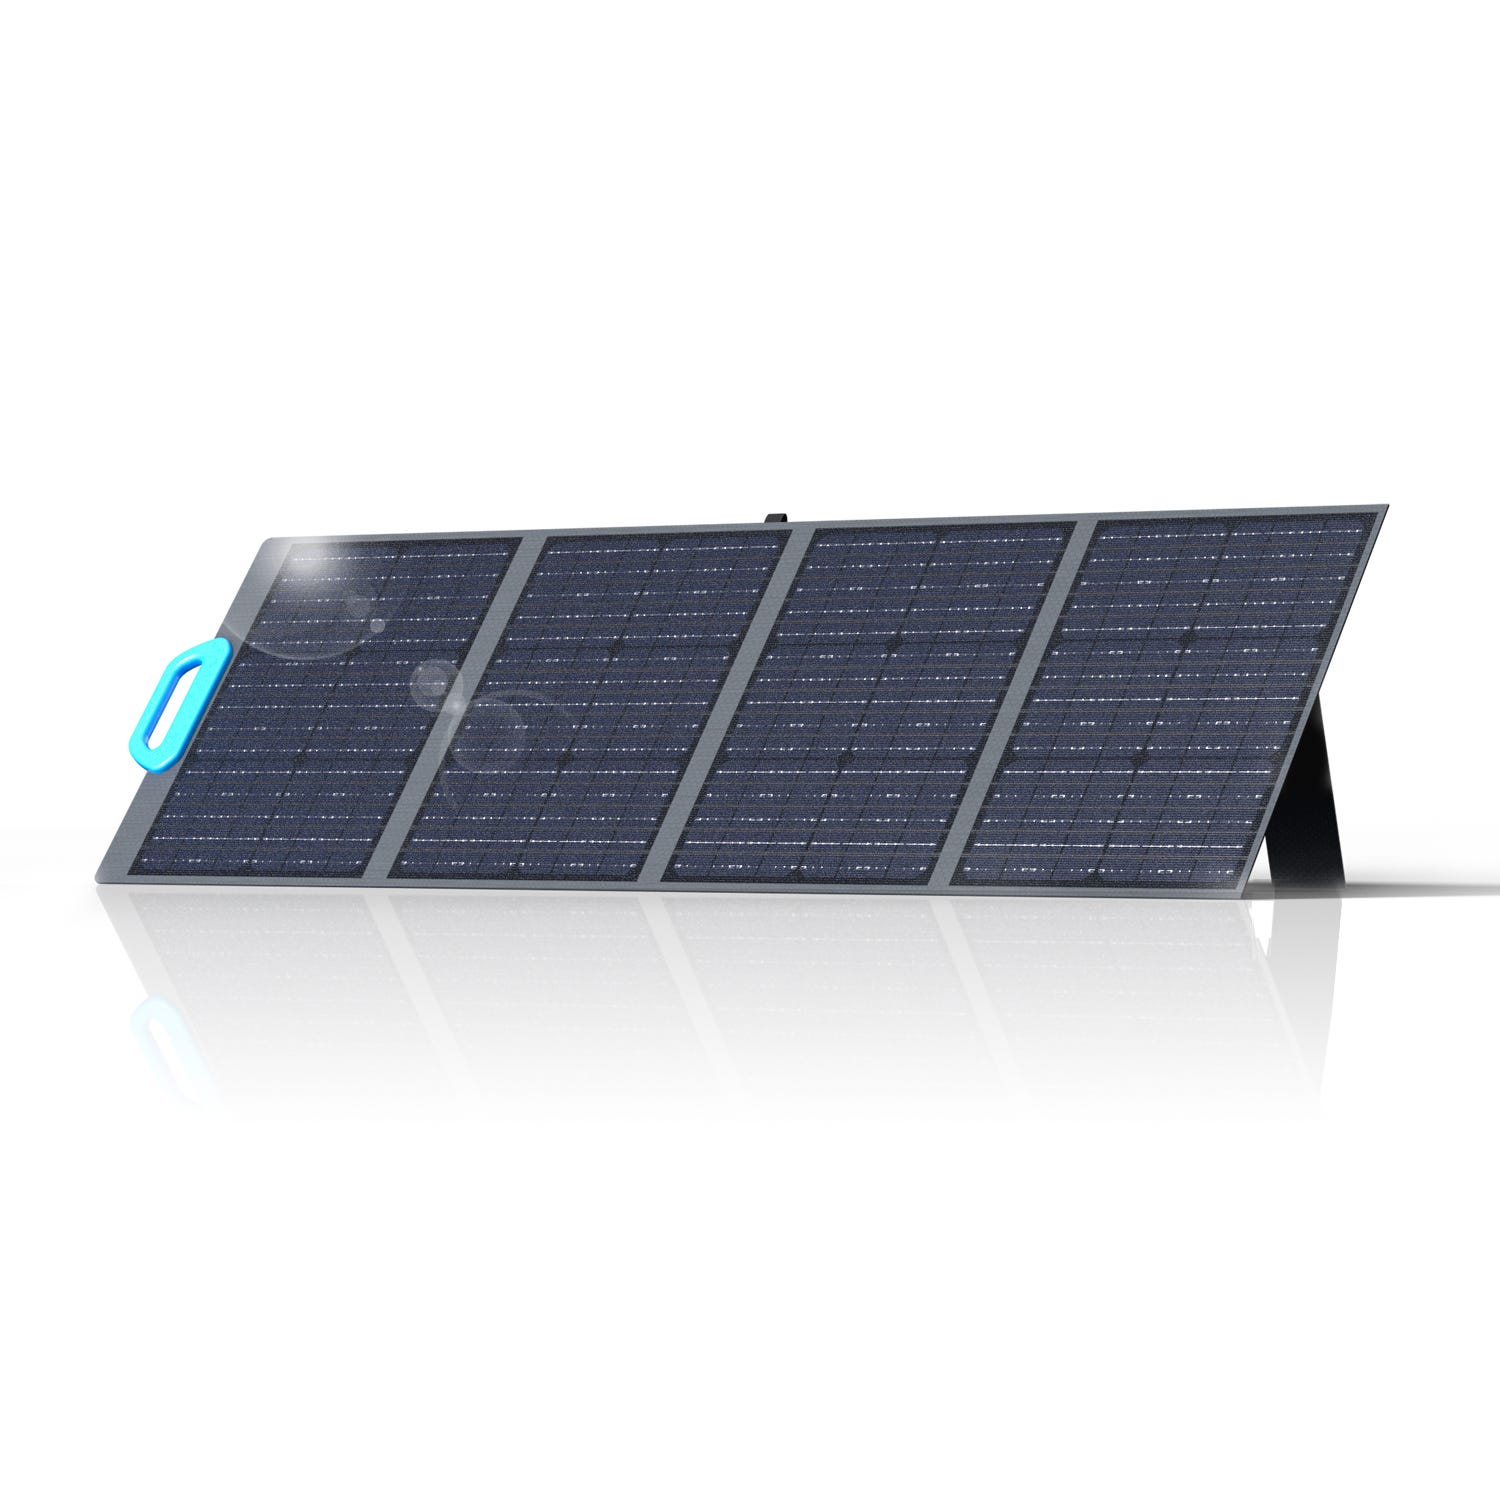 Placa solar portatil y plegable de 120W